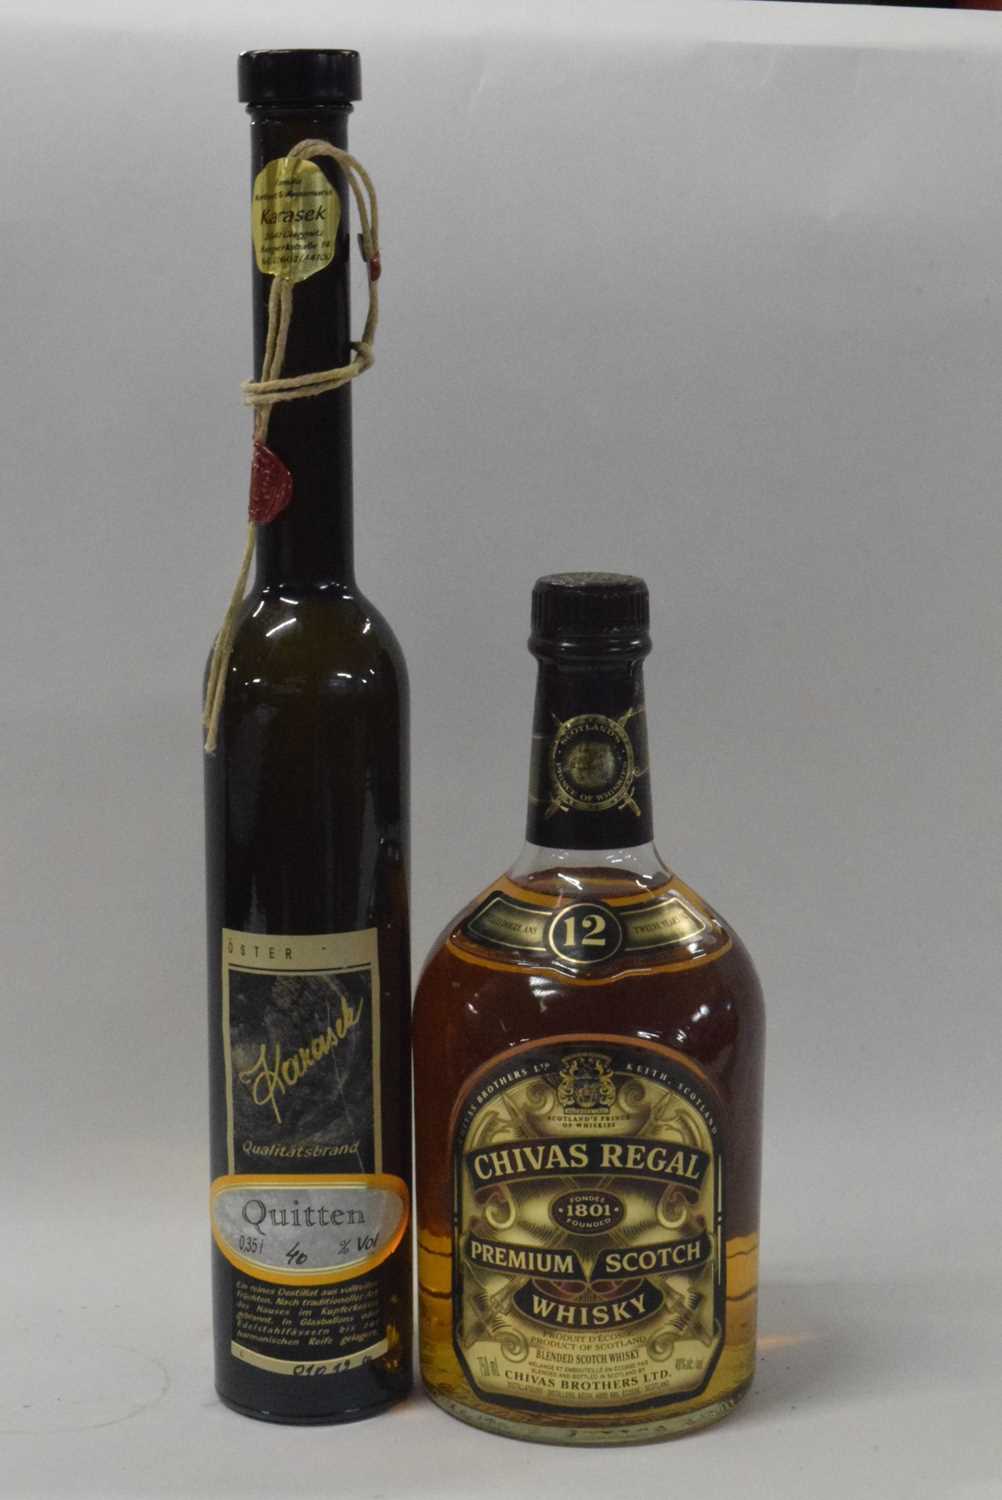 Chivas Regal 12 years old Premium Scotch Whisky and Karasek Quittenbrand, (2)